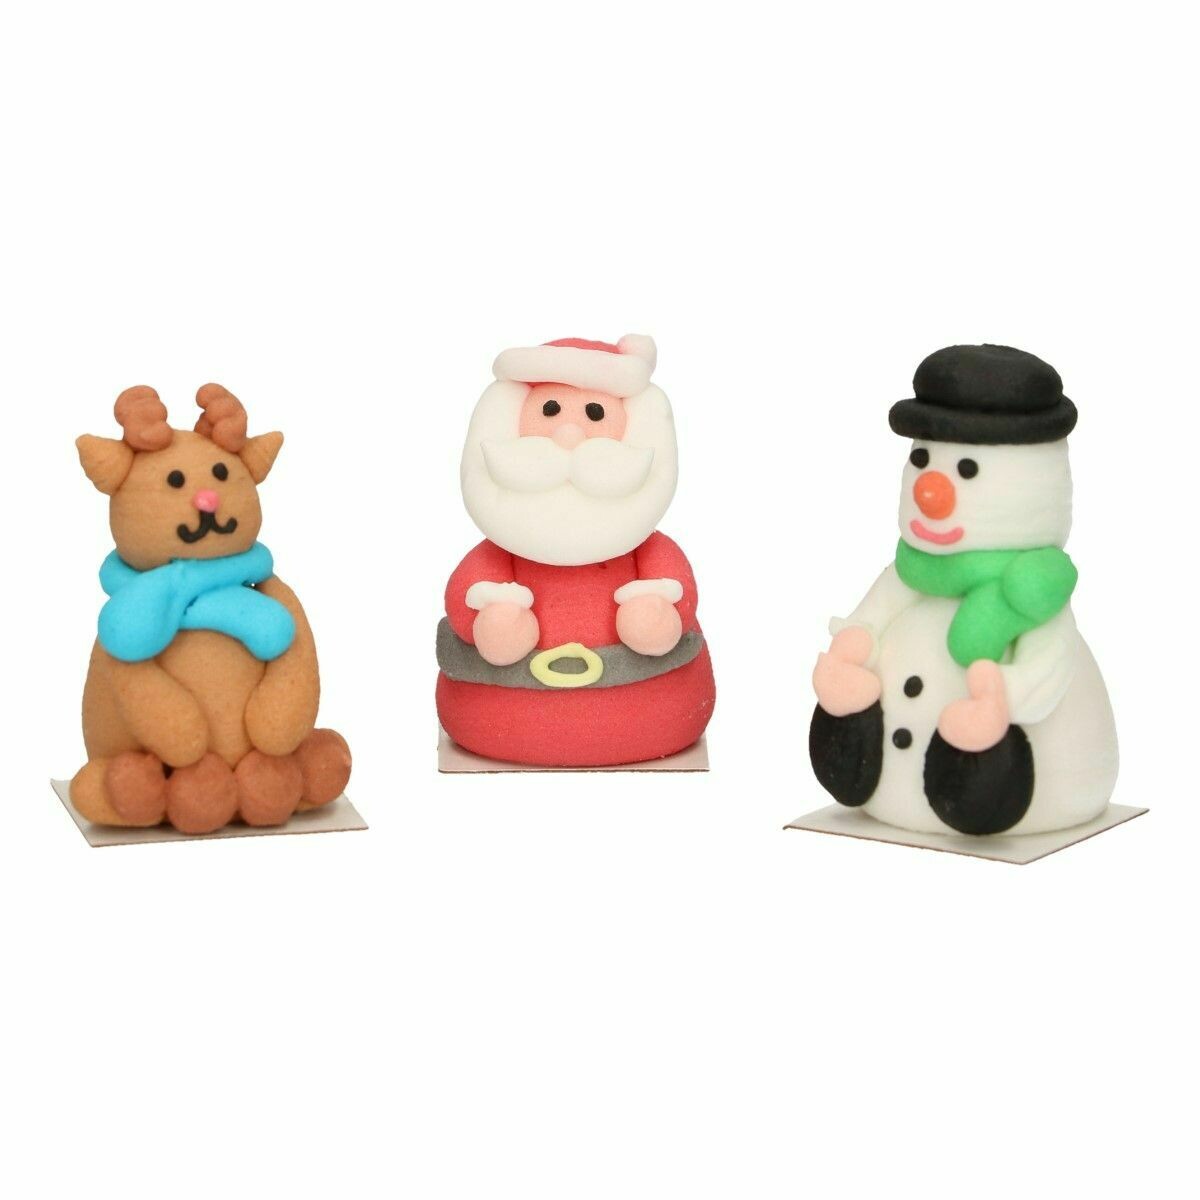 FunCakes Sugar Decorations 3D Christmas Figures Set of 3- Χριστουγεννιάτικα Ζαχαρωτά 3D - ΑΓΙΟΣ ΒΑΣΙΛΗΣ, ΡΟΥΝΤΟΛΦ, ΧΙΟΝΑΝΘΡΩΠΟΣ